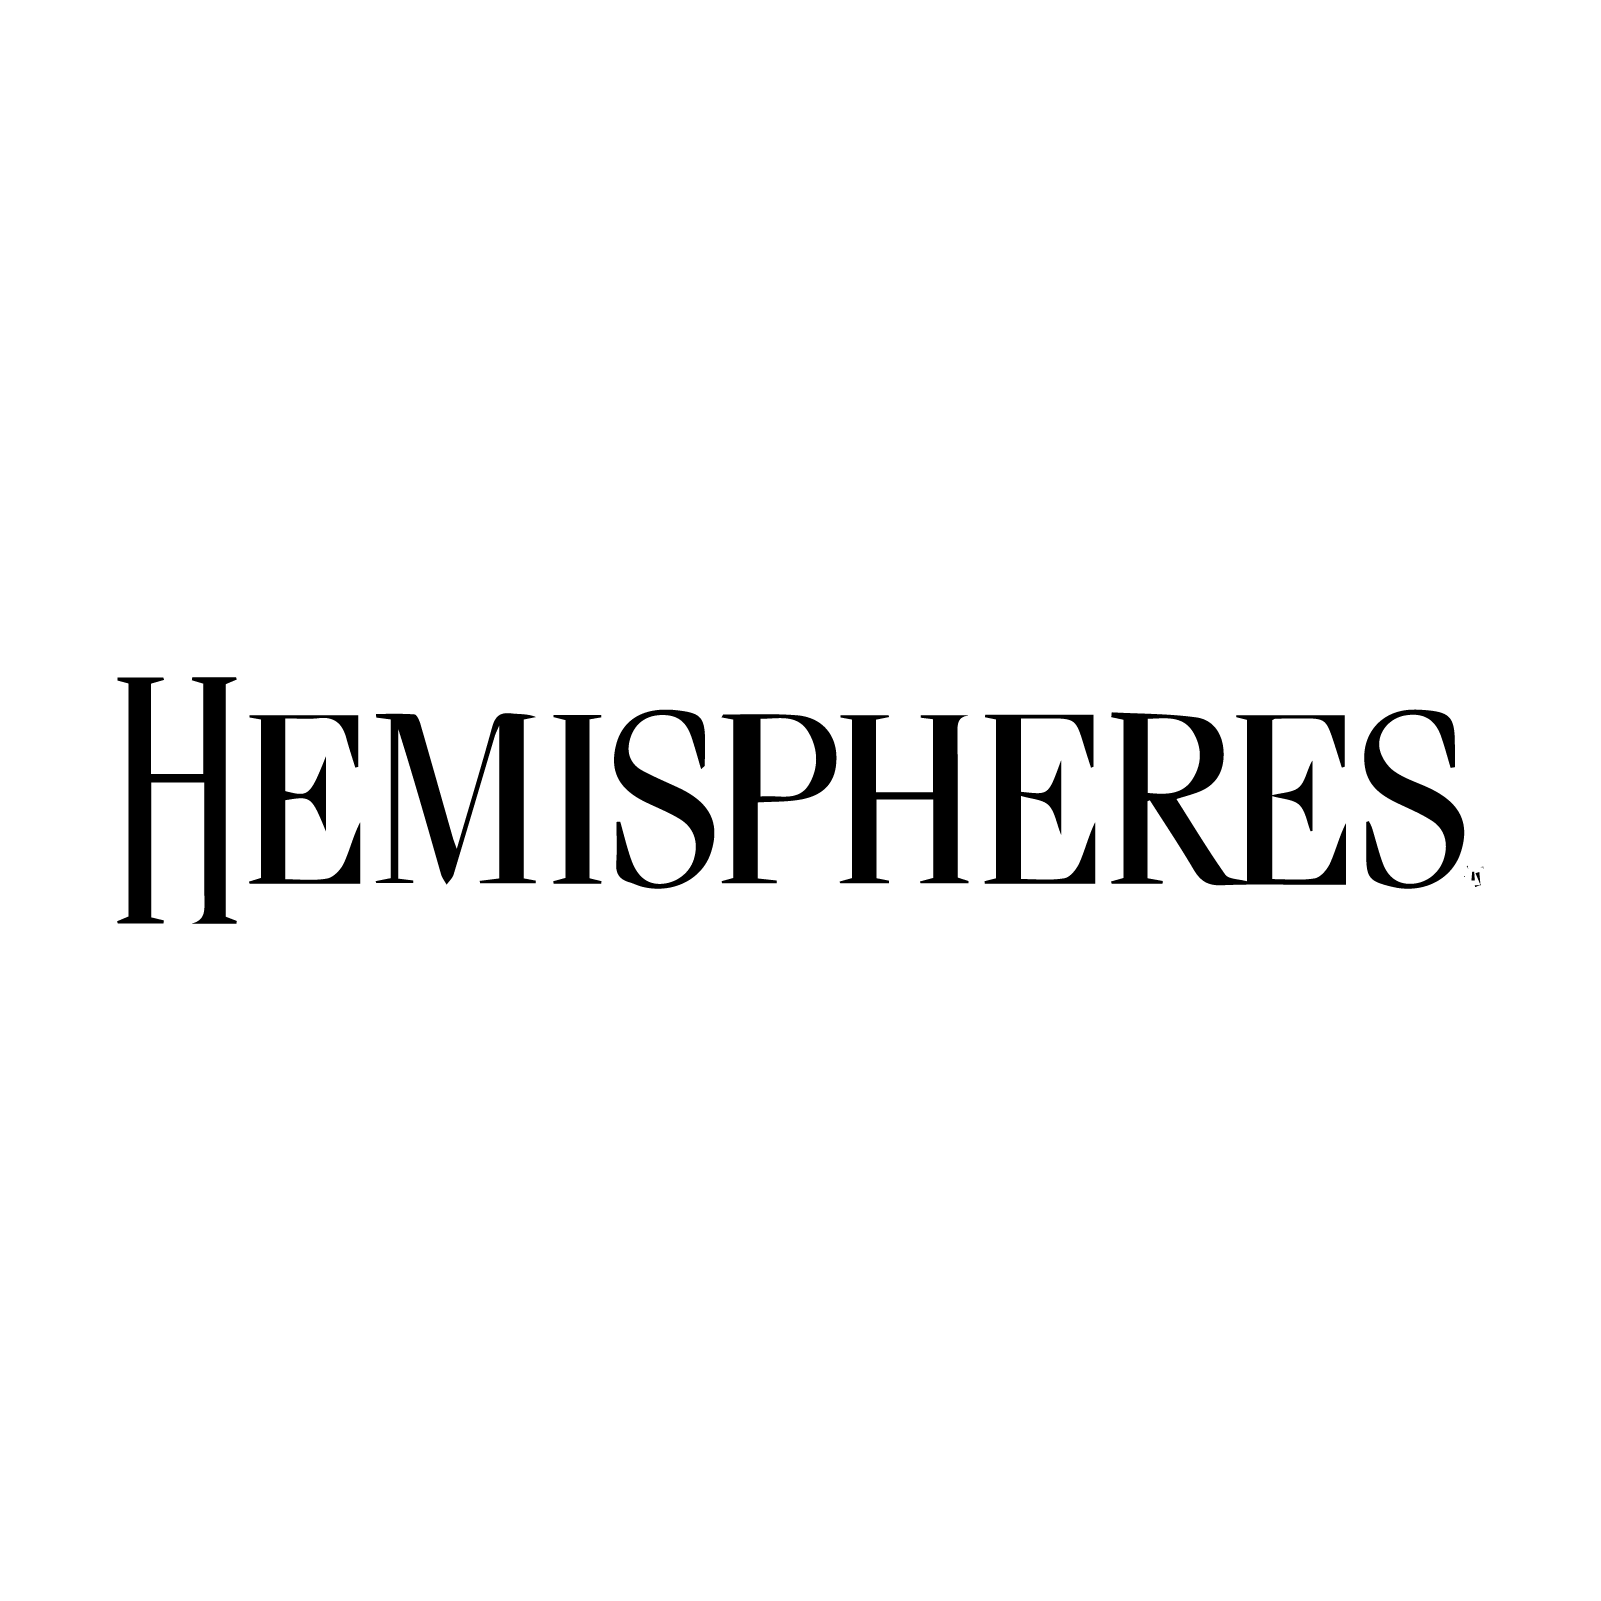 Press Logos_Hemispheres.png